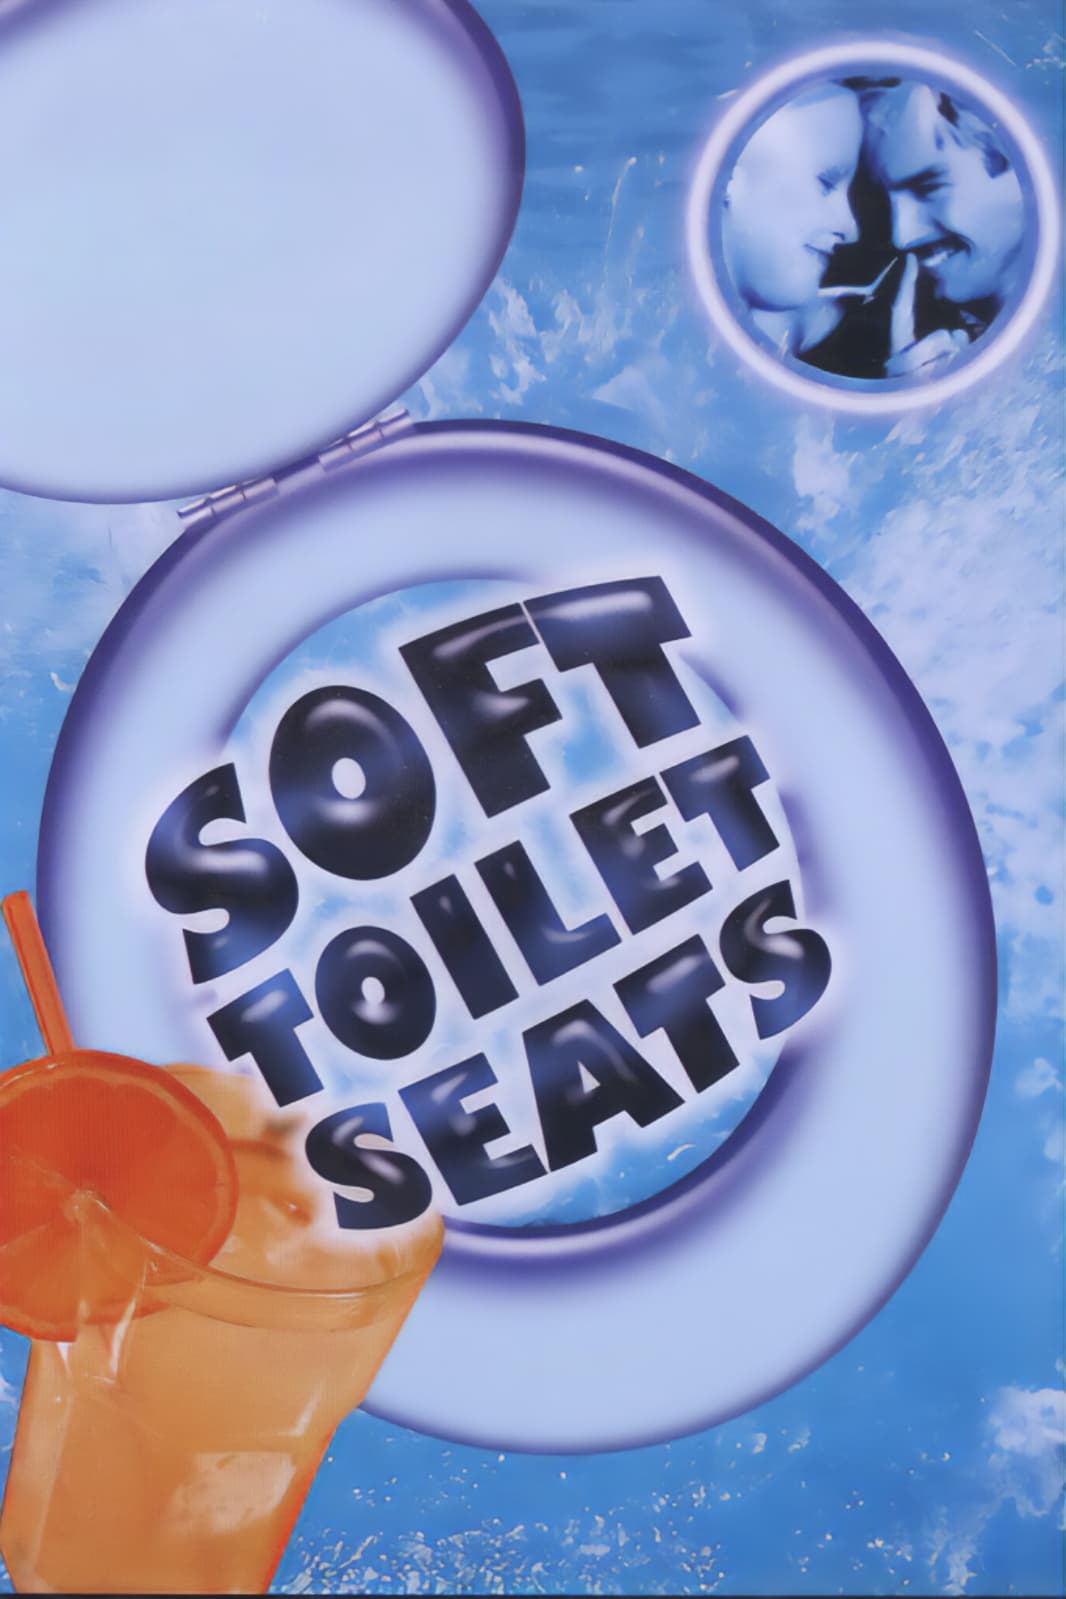 Soft Toilet Seats (1999) постер